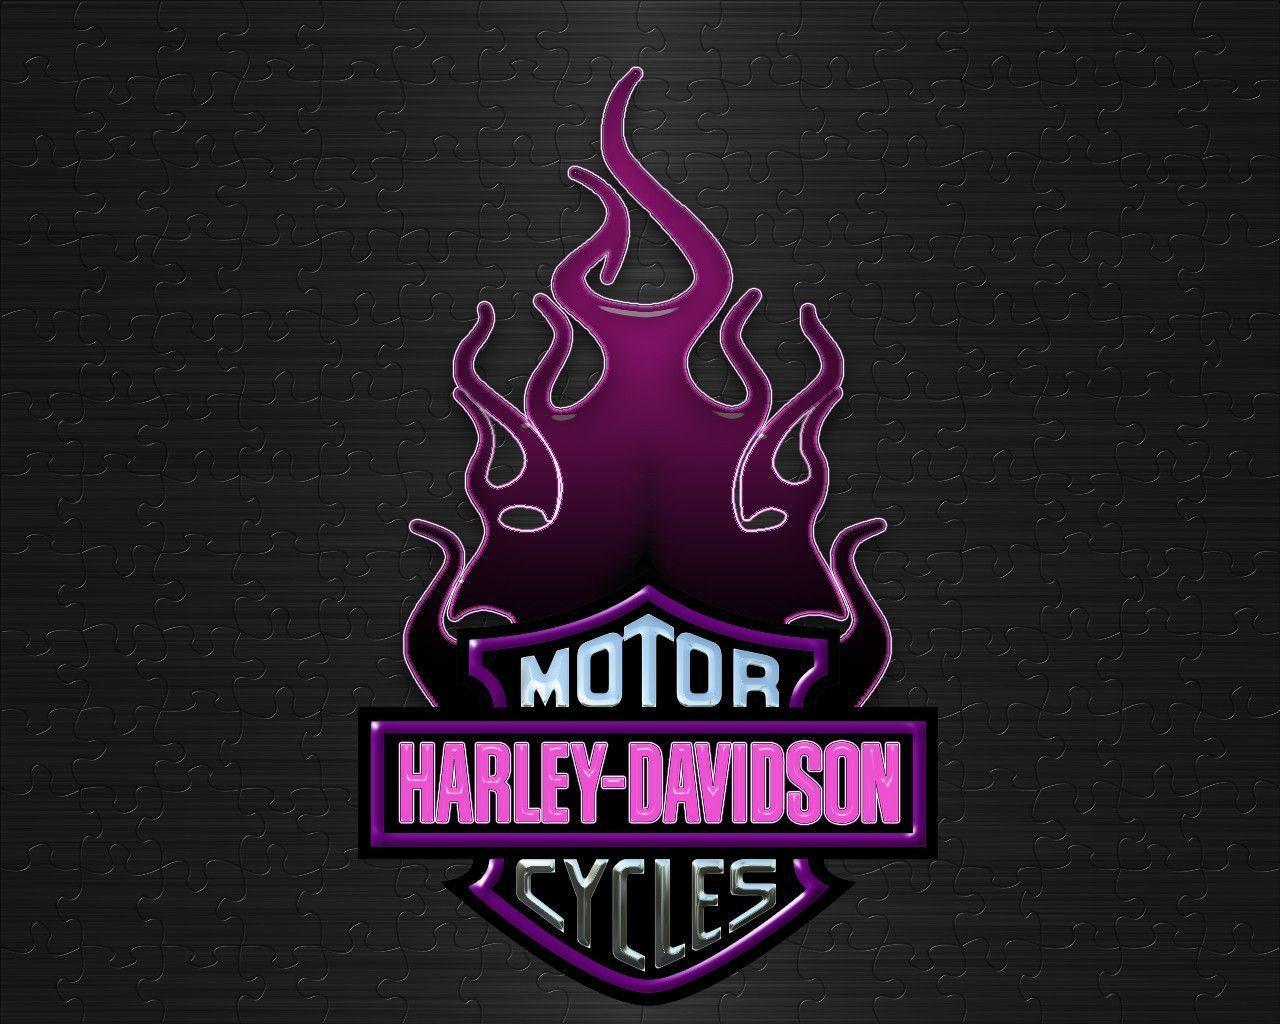 Harley Davidson HD Wallpaper Free download